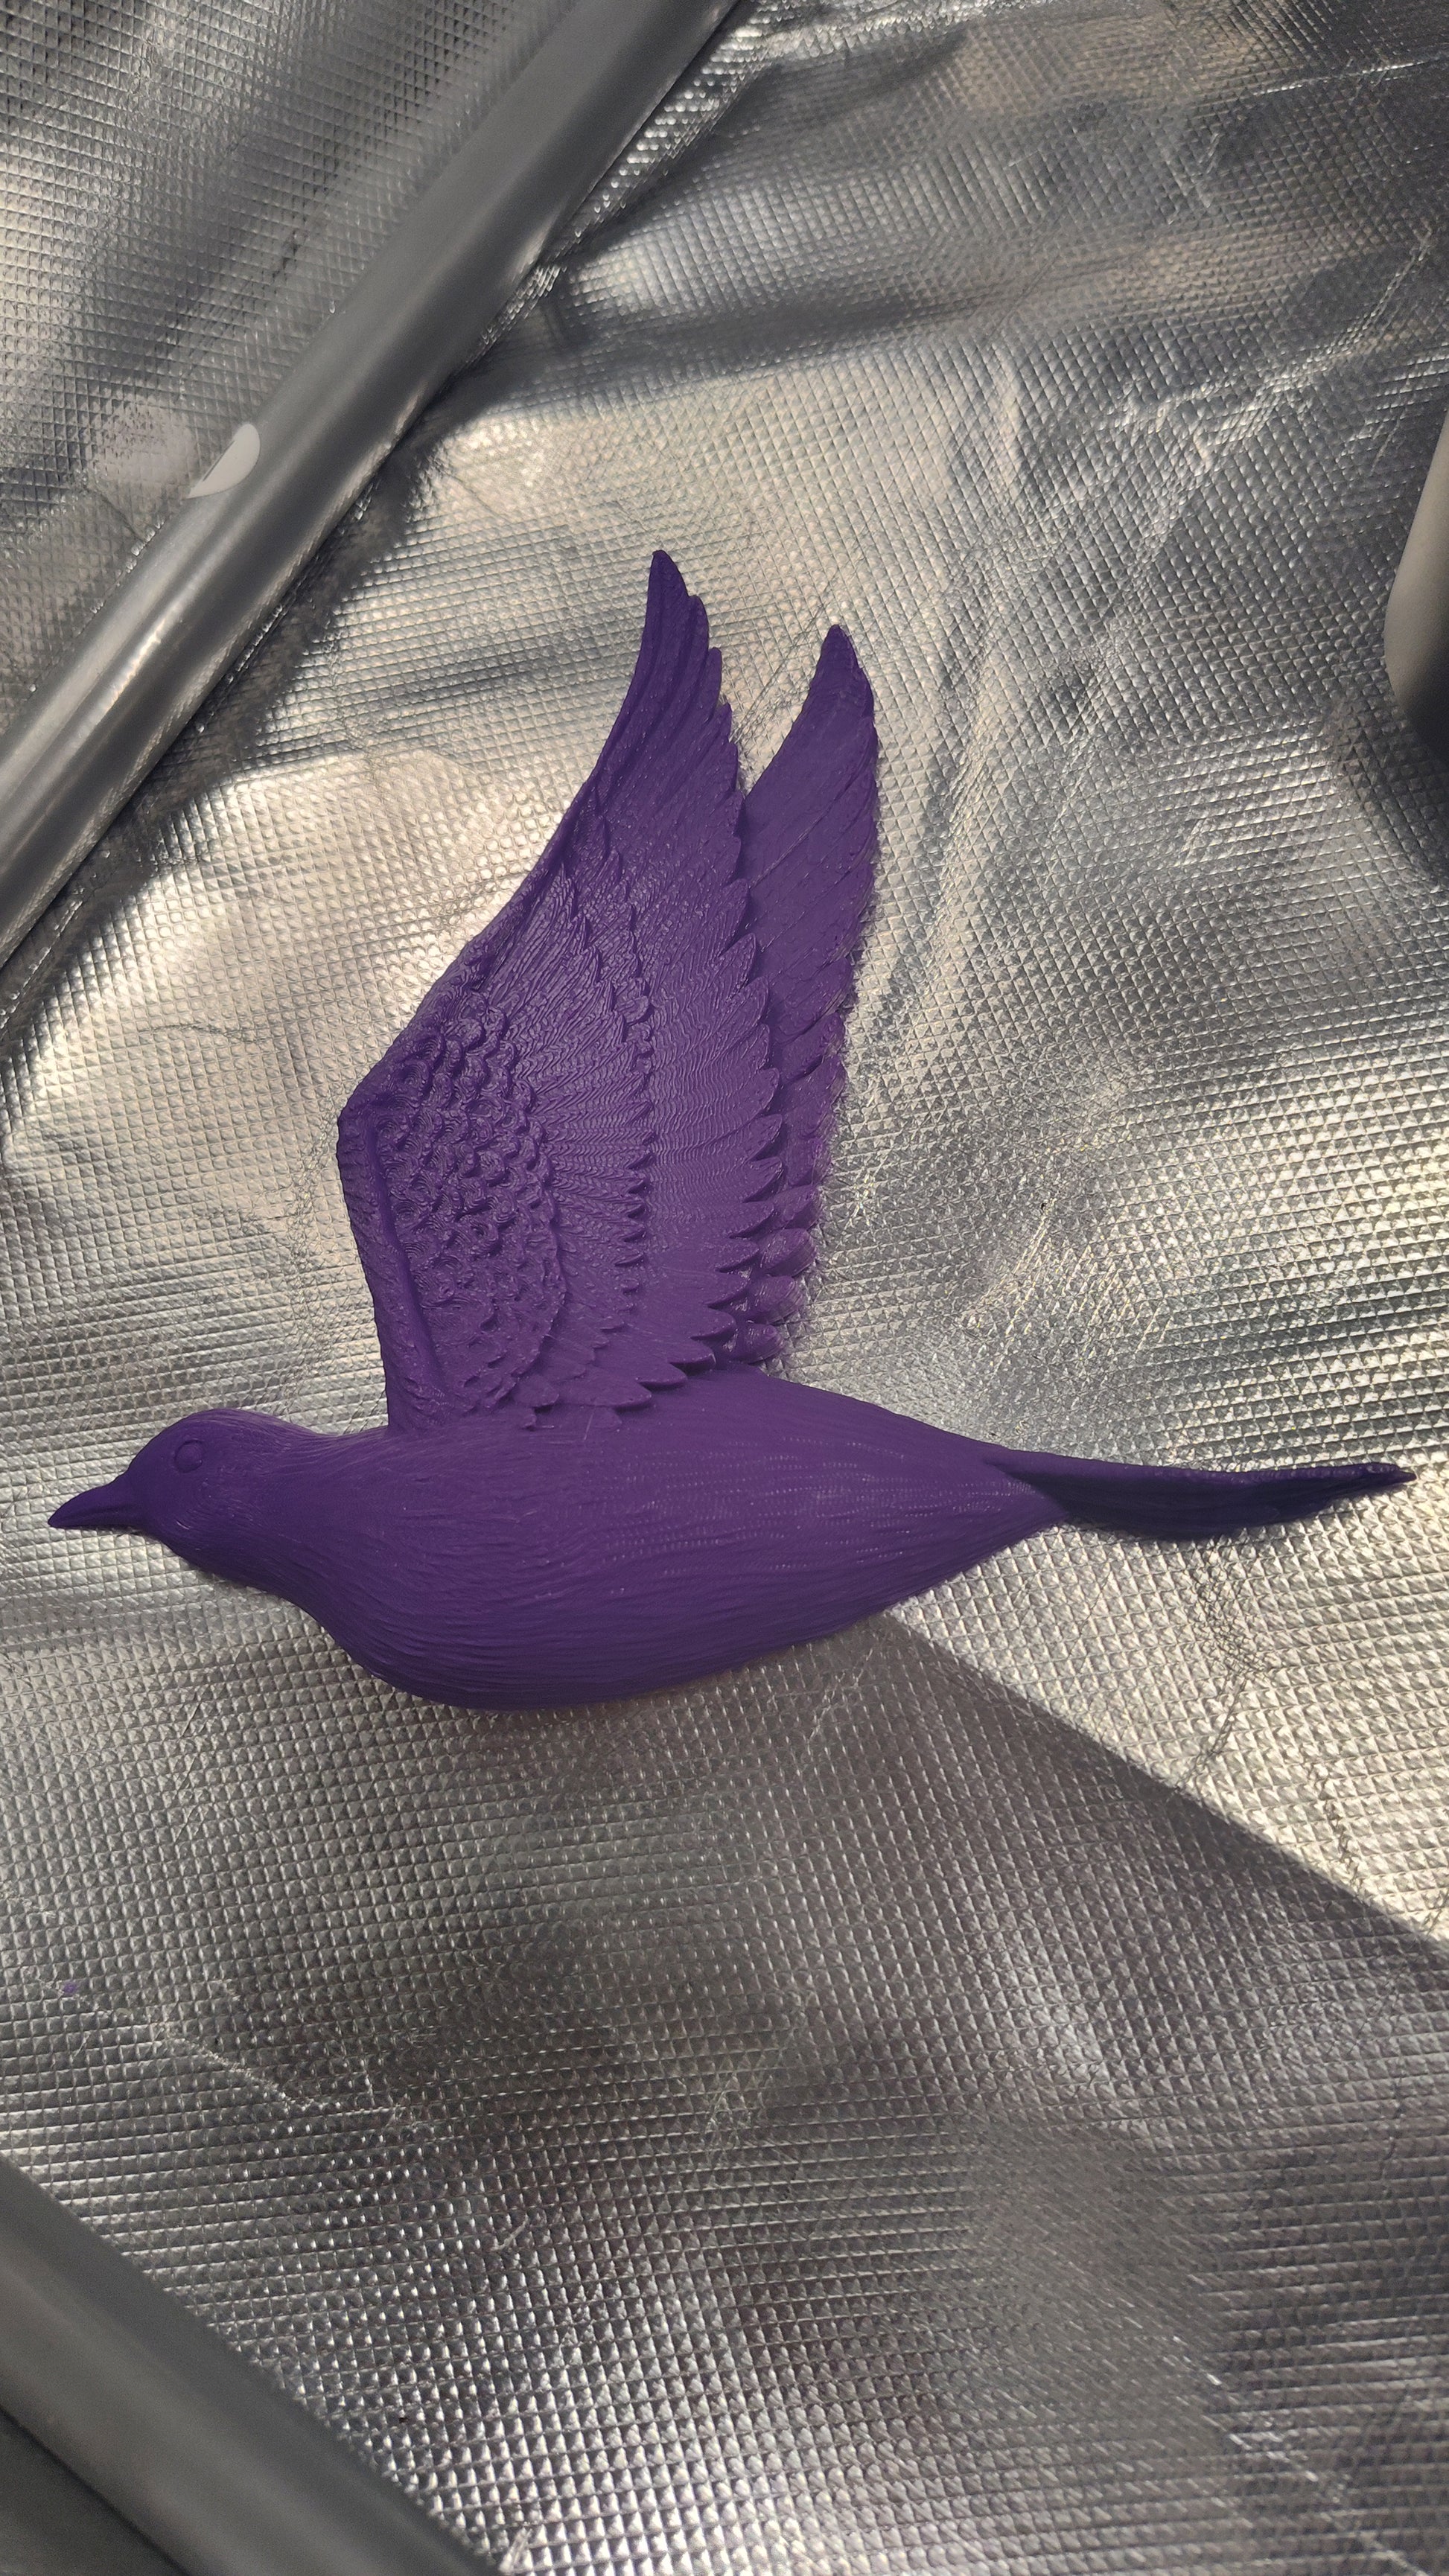 This is Bird 1 in midnight purple